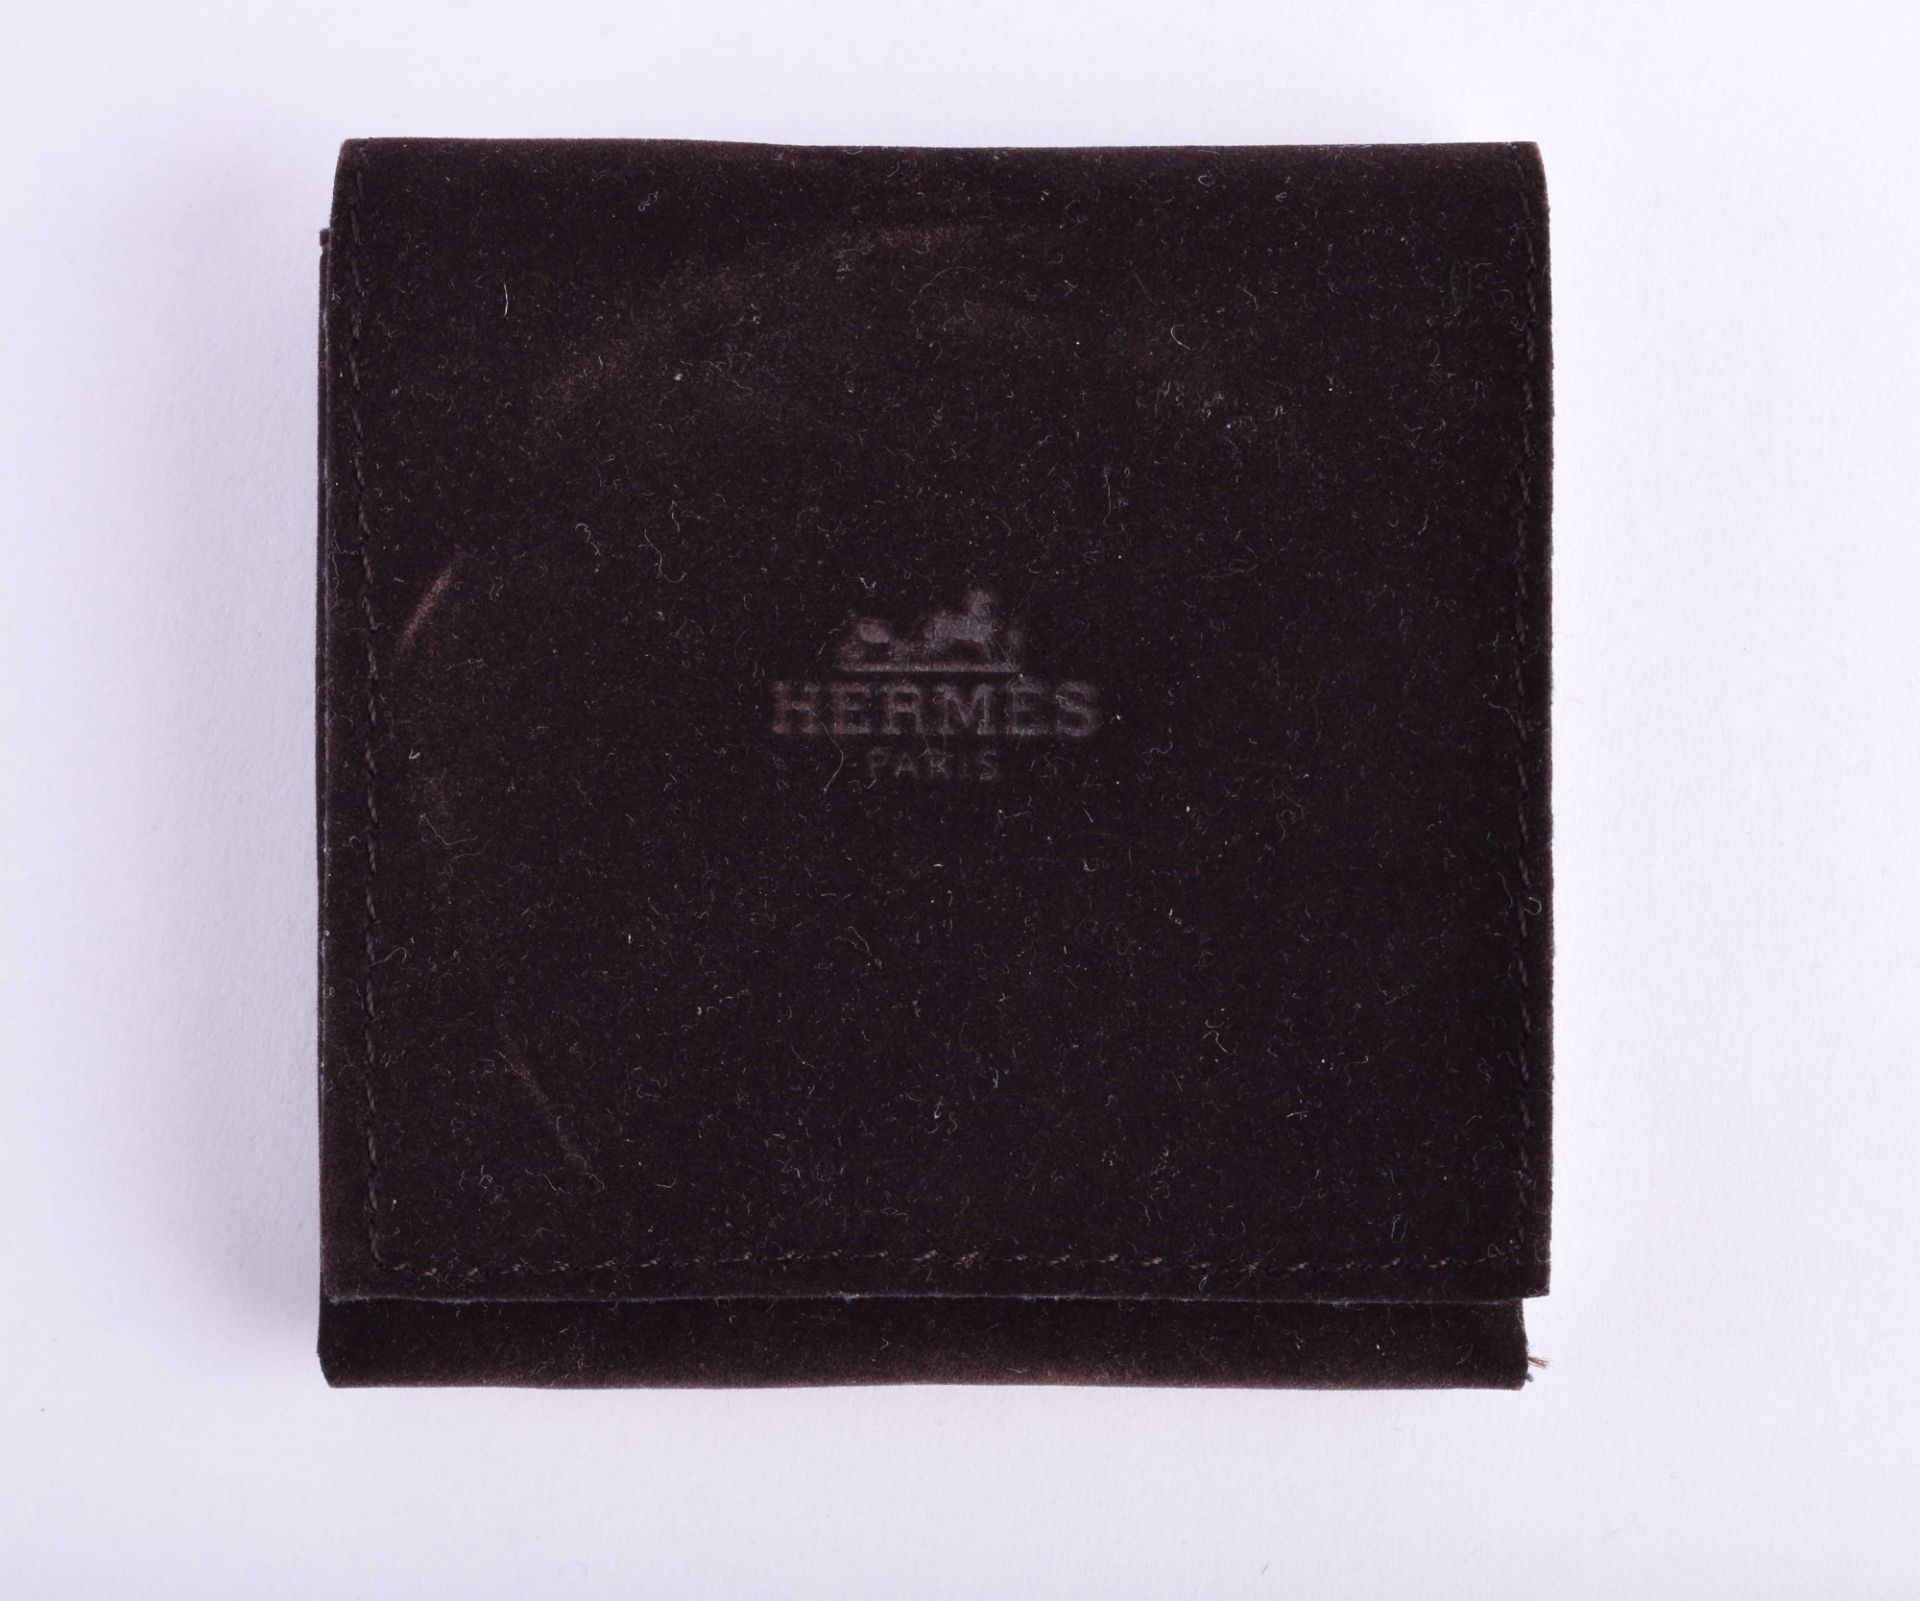  Vintage enamel bangle Hermes Paris - Image 6 of 6